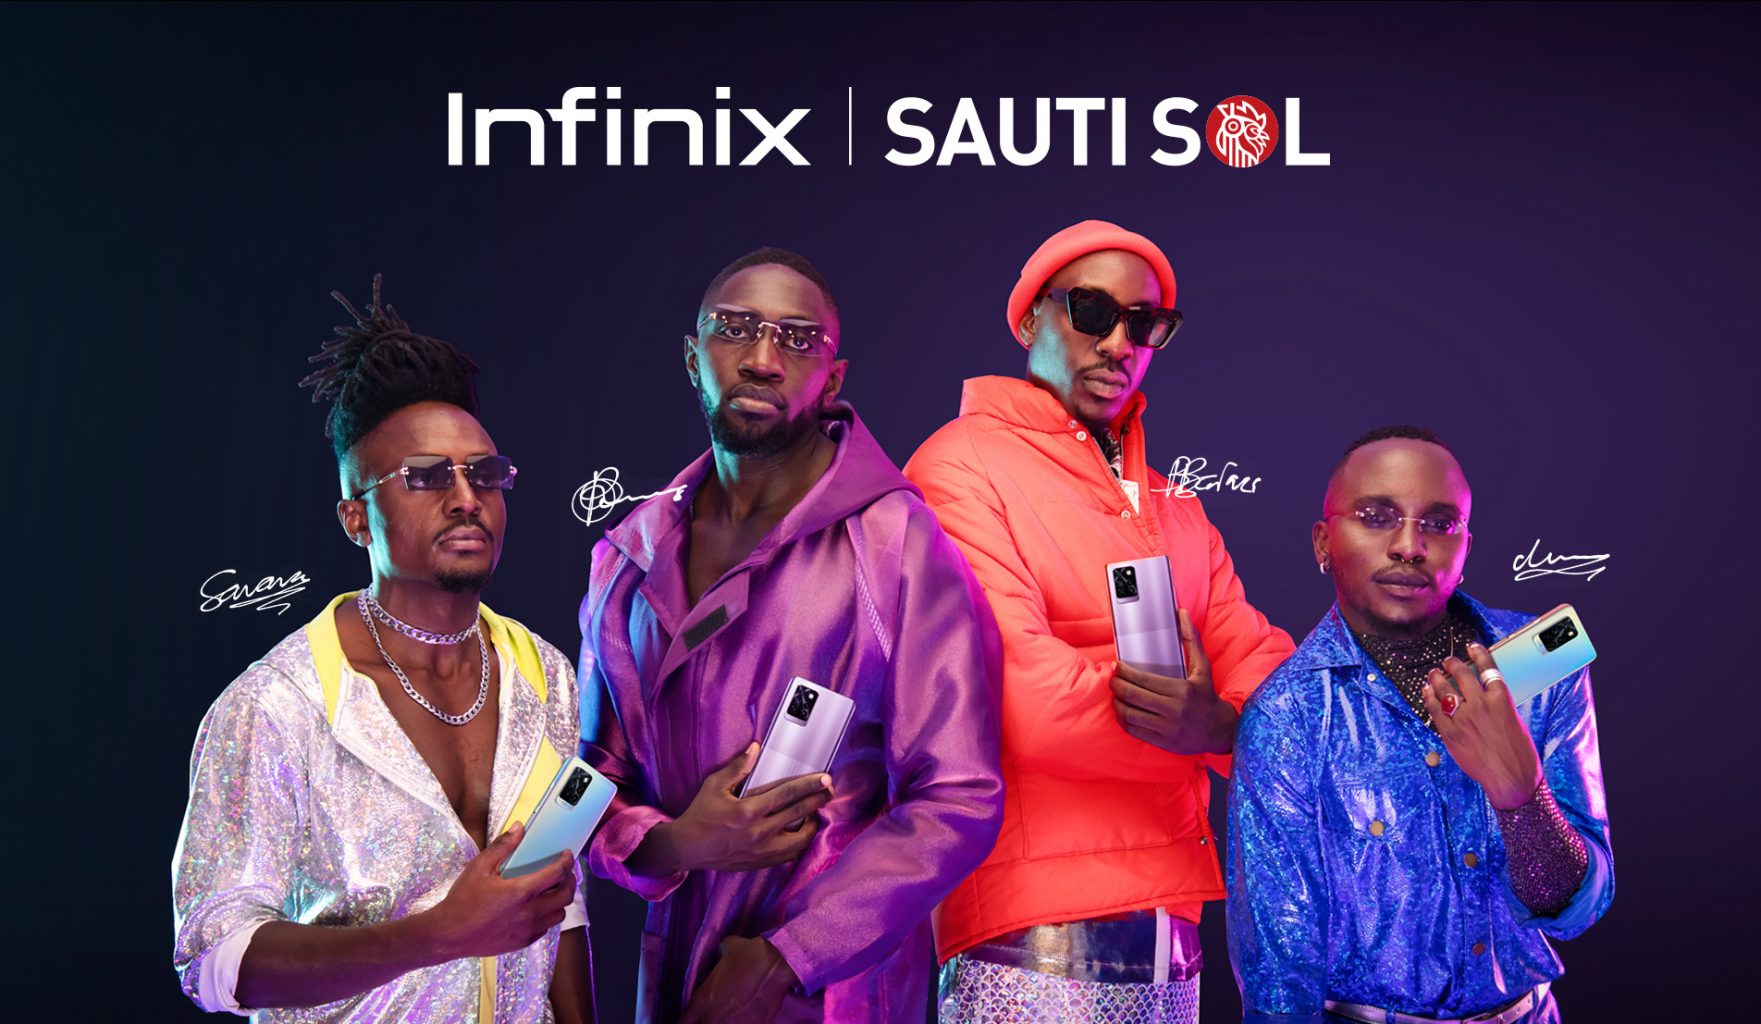 Infinix Sauti Sol Brand Ambassadors